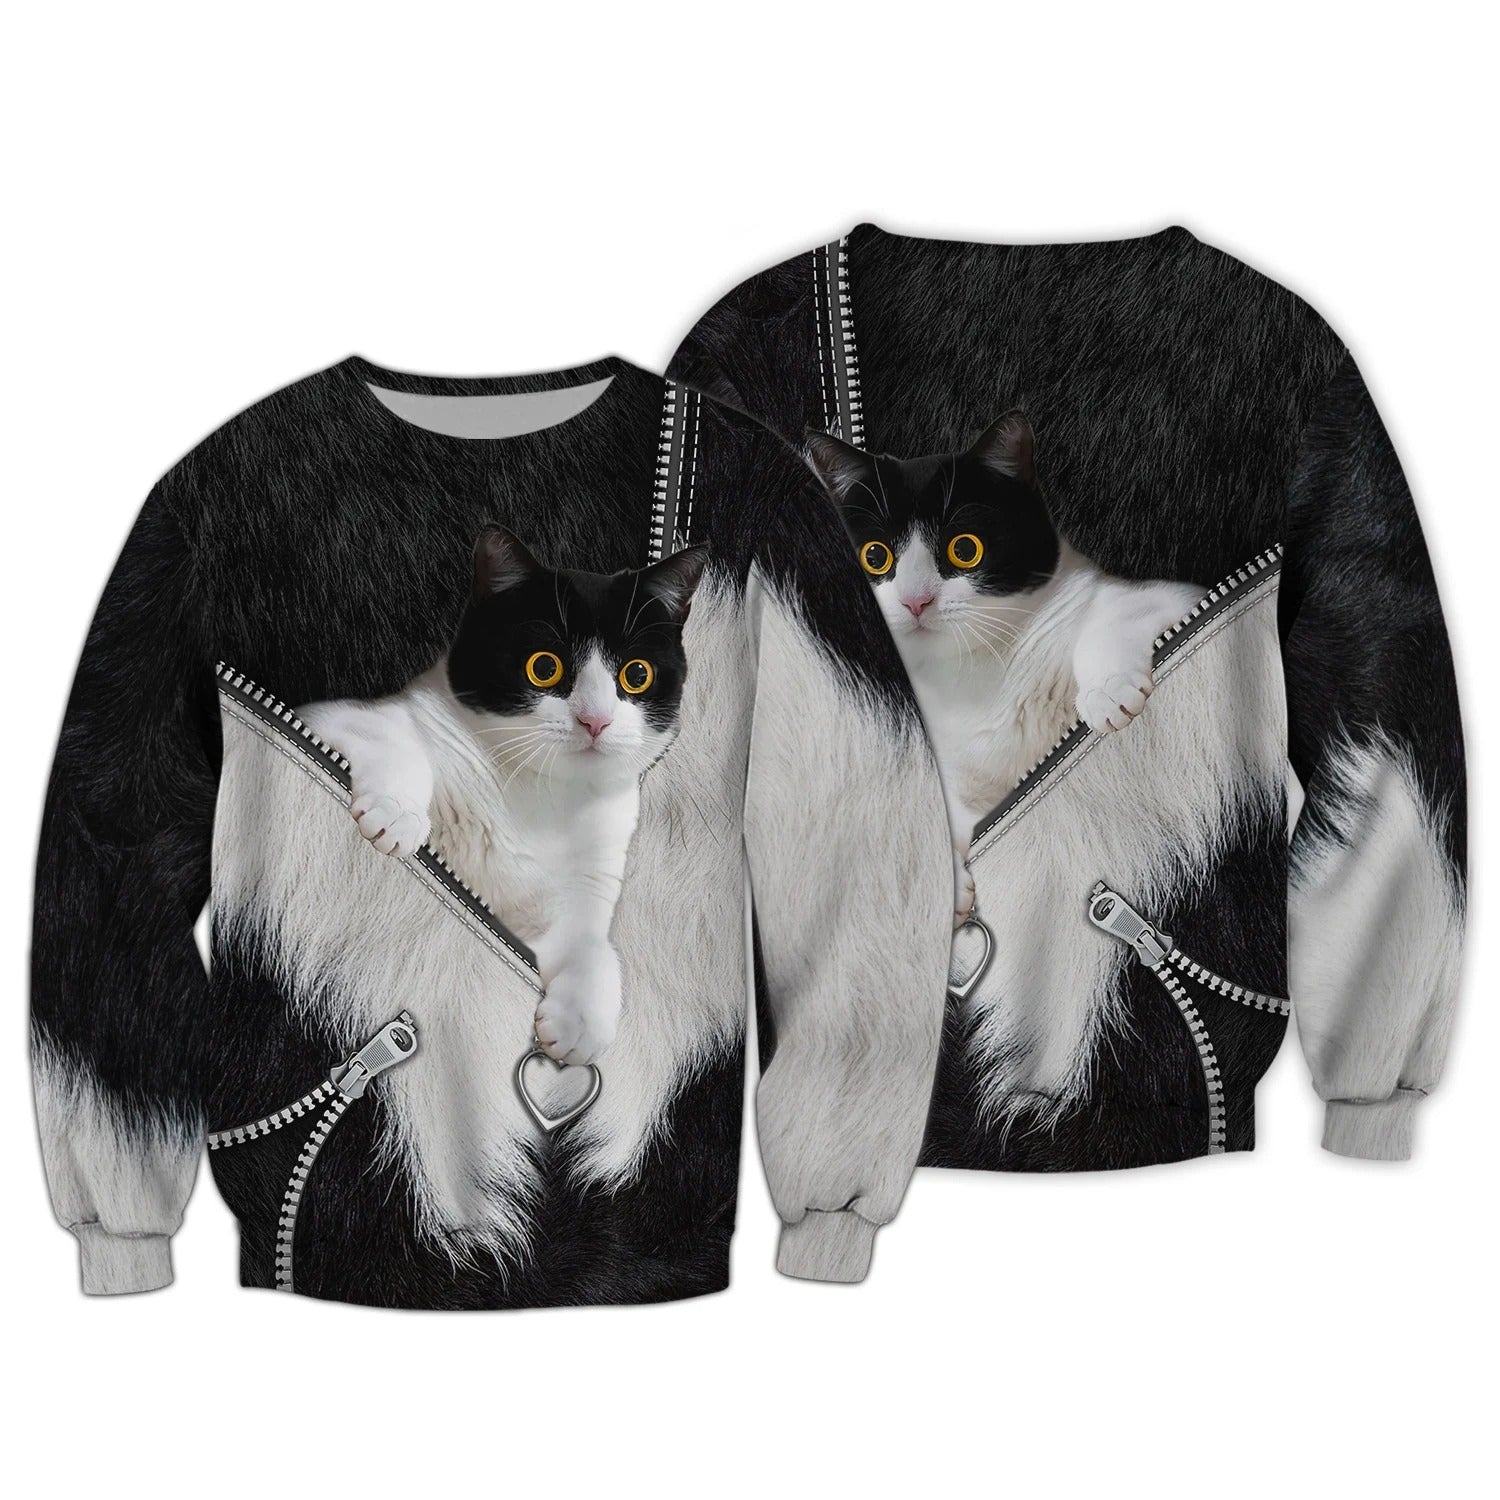 Cat Lover Shirts Cat Tuxedo 3D Full Print Shirts Cats Shirts/ Cat Hoodie Zip Up